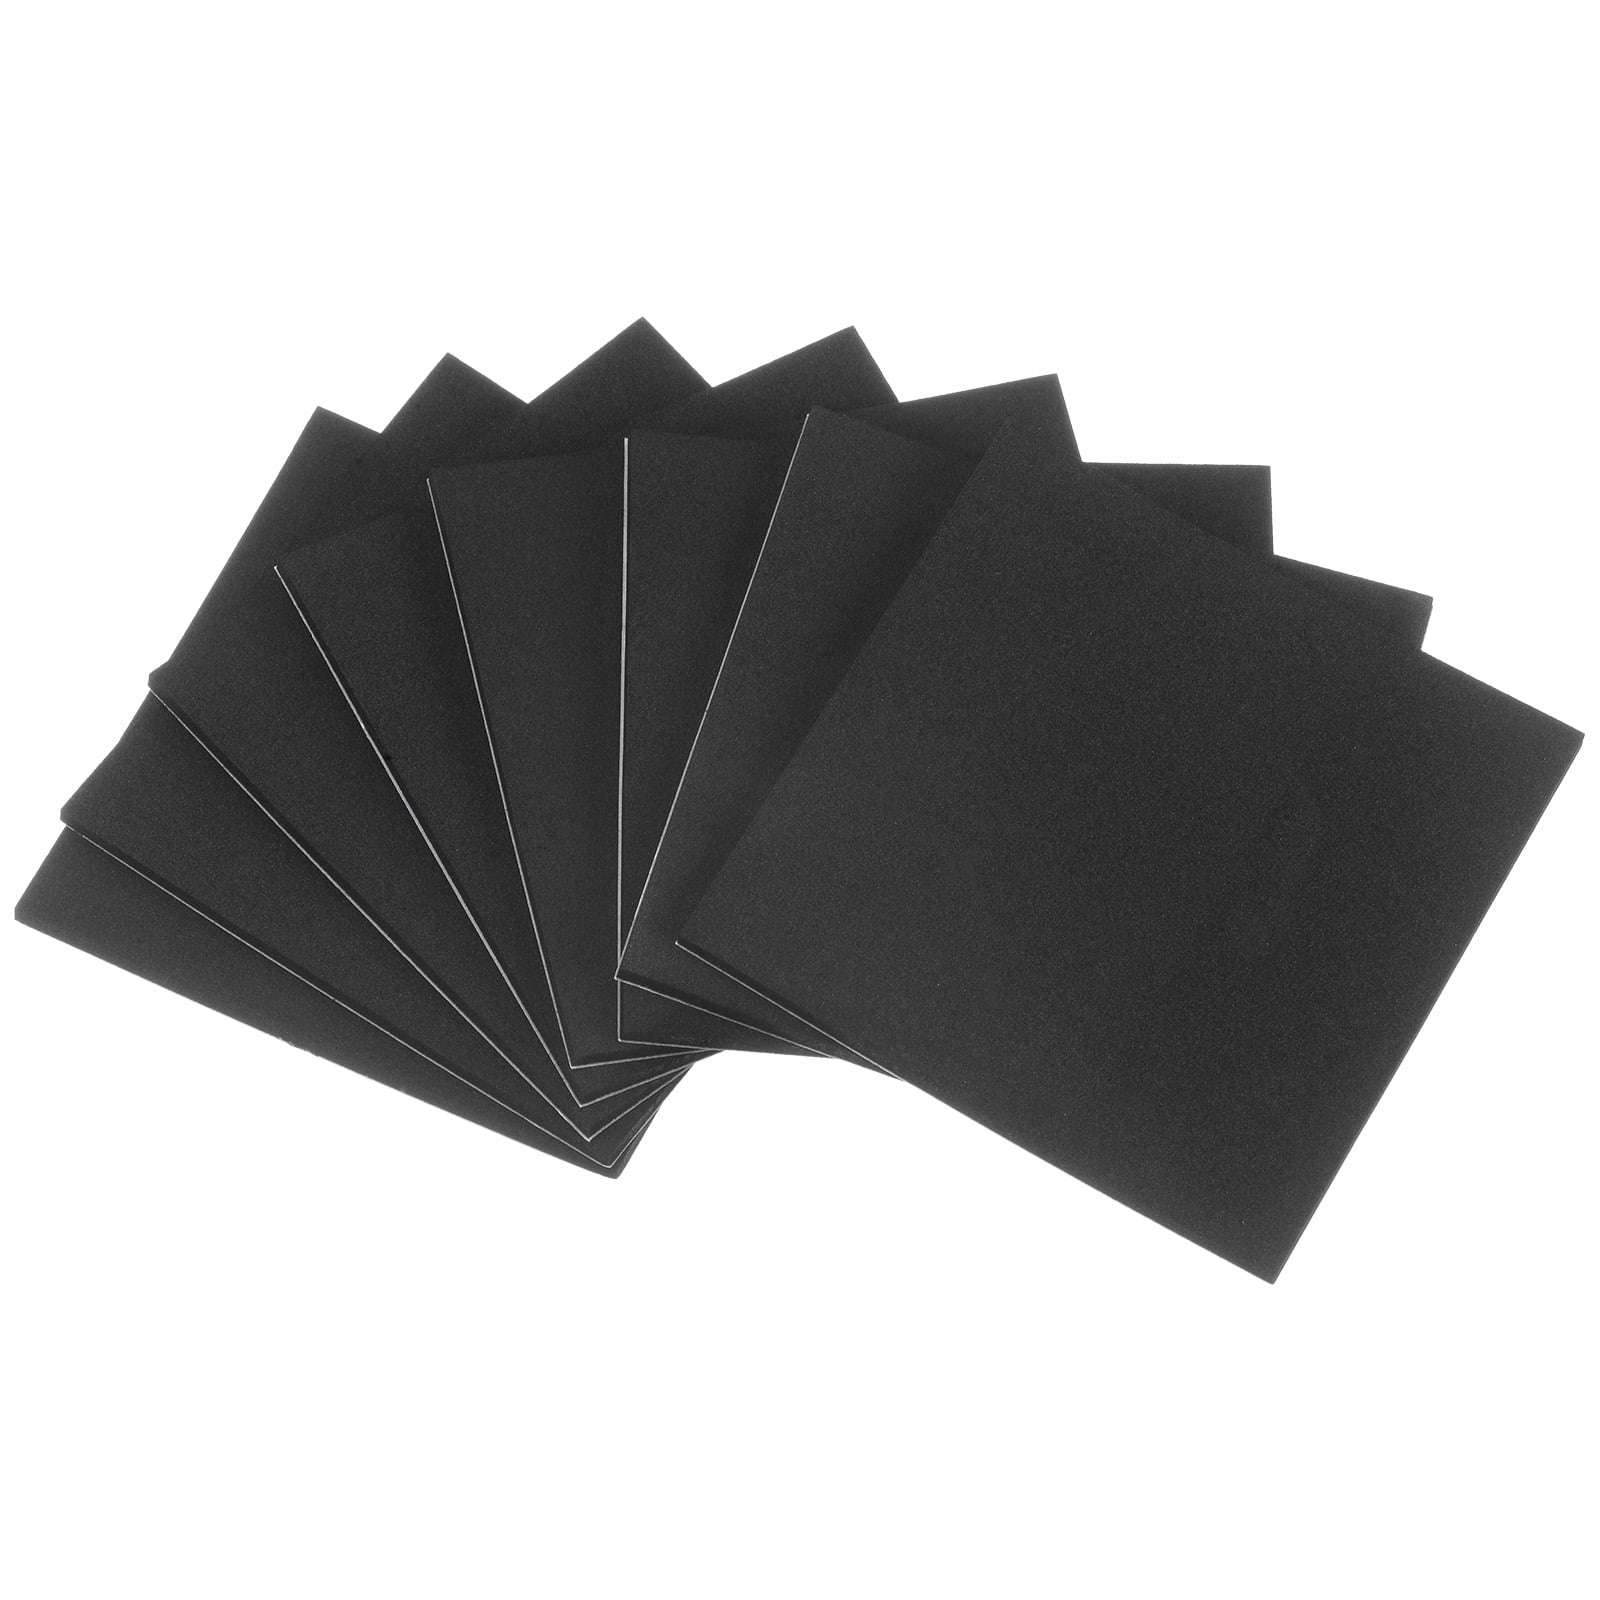 8 Packs Adhesive Foam Padding Sheets 1/8